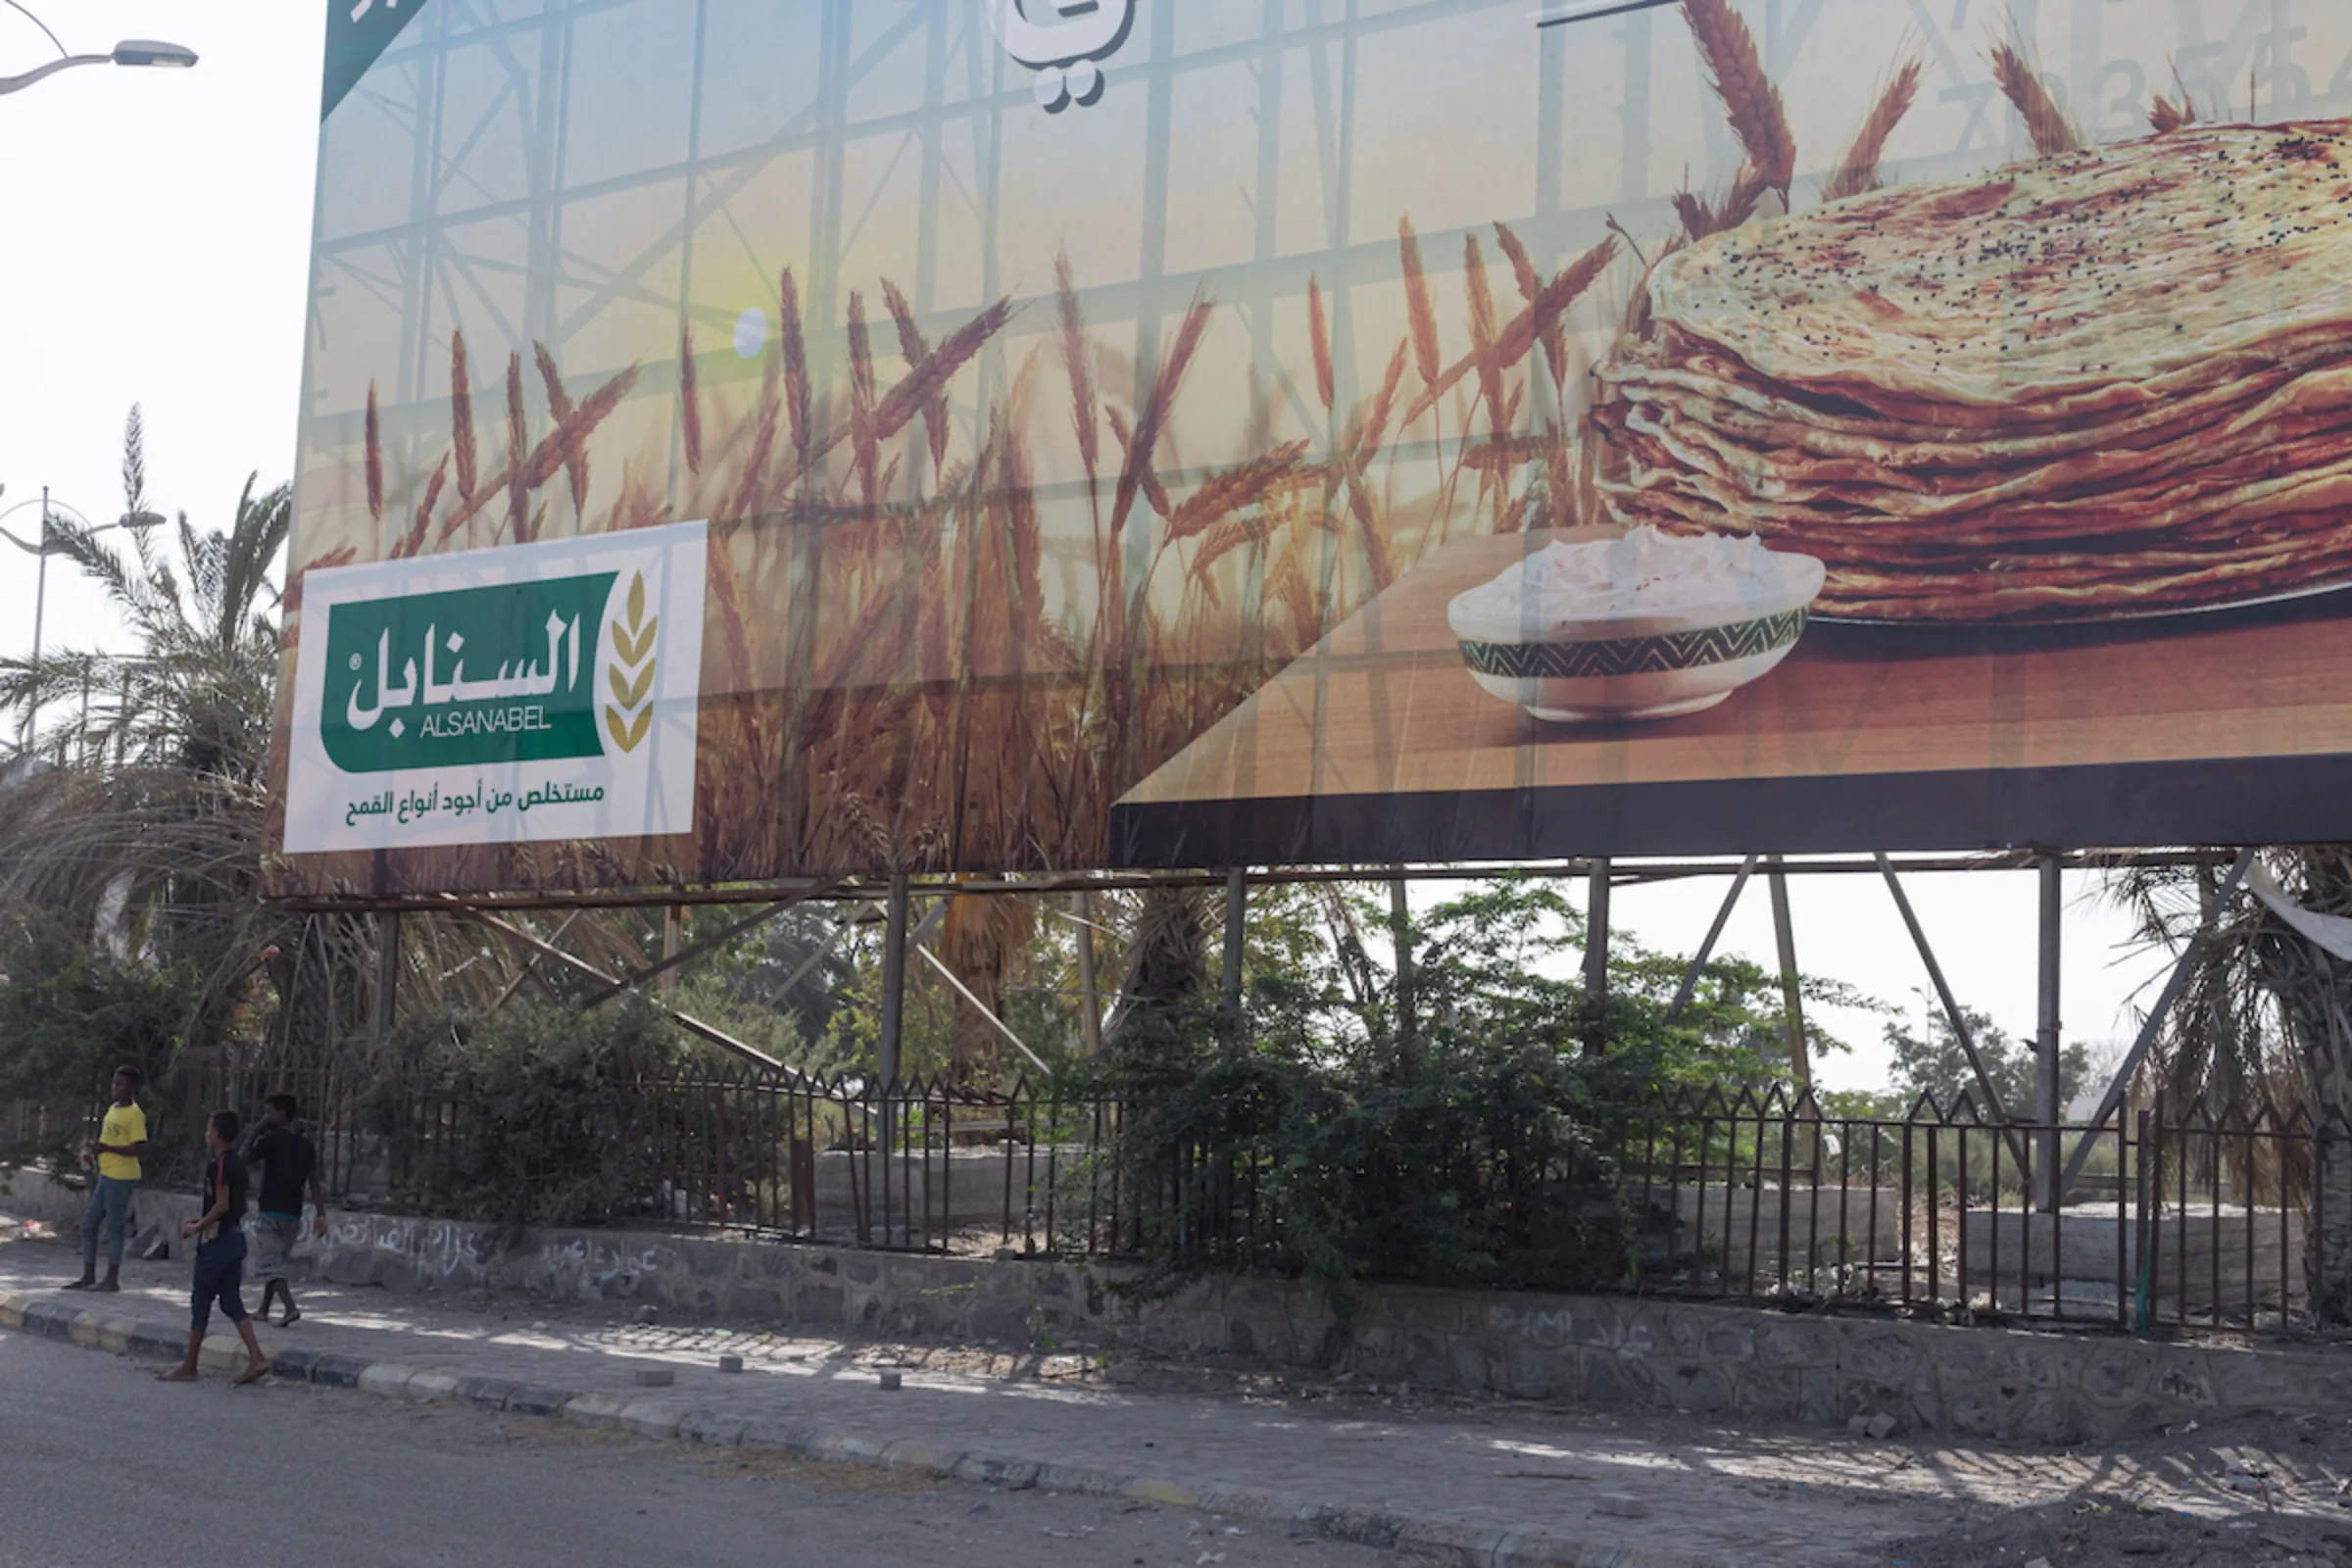 Men stand beneath a billboard advertising wheat flour, in Aden, Yemen, on February 21, 2022. Thomson Reuters Foundation/Sam Tarling